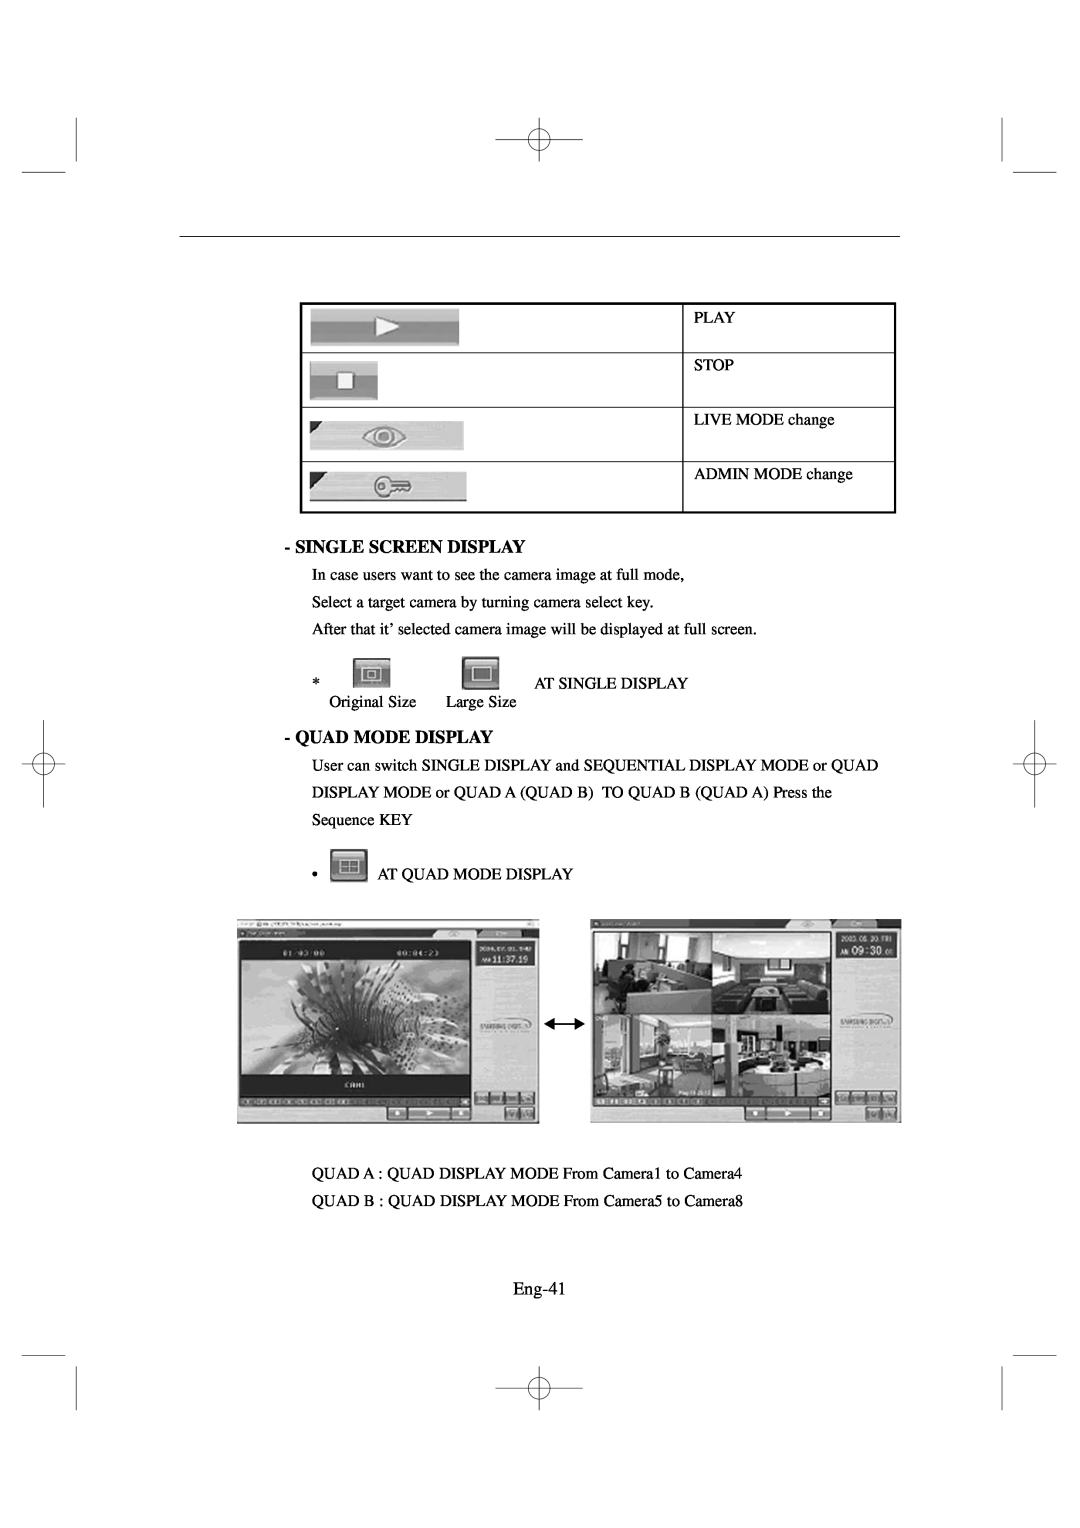 Samsung SSC17WEB manual Single Screen Display, Quad Mode Display, Eng-41 